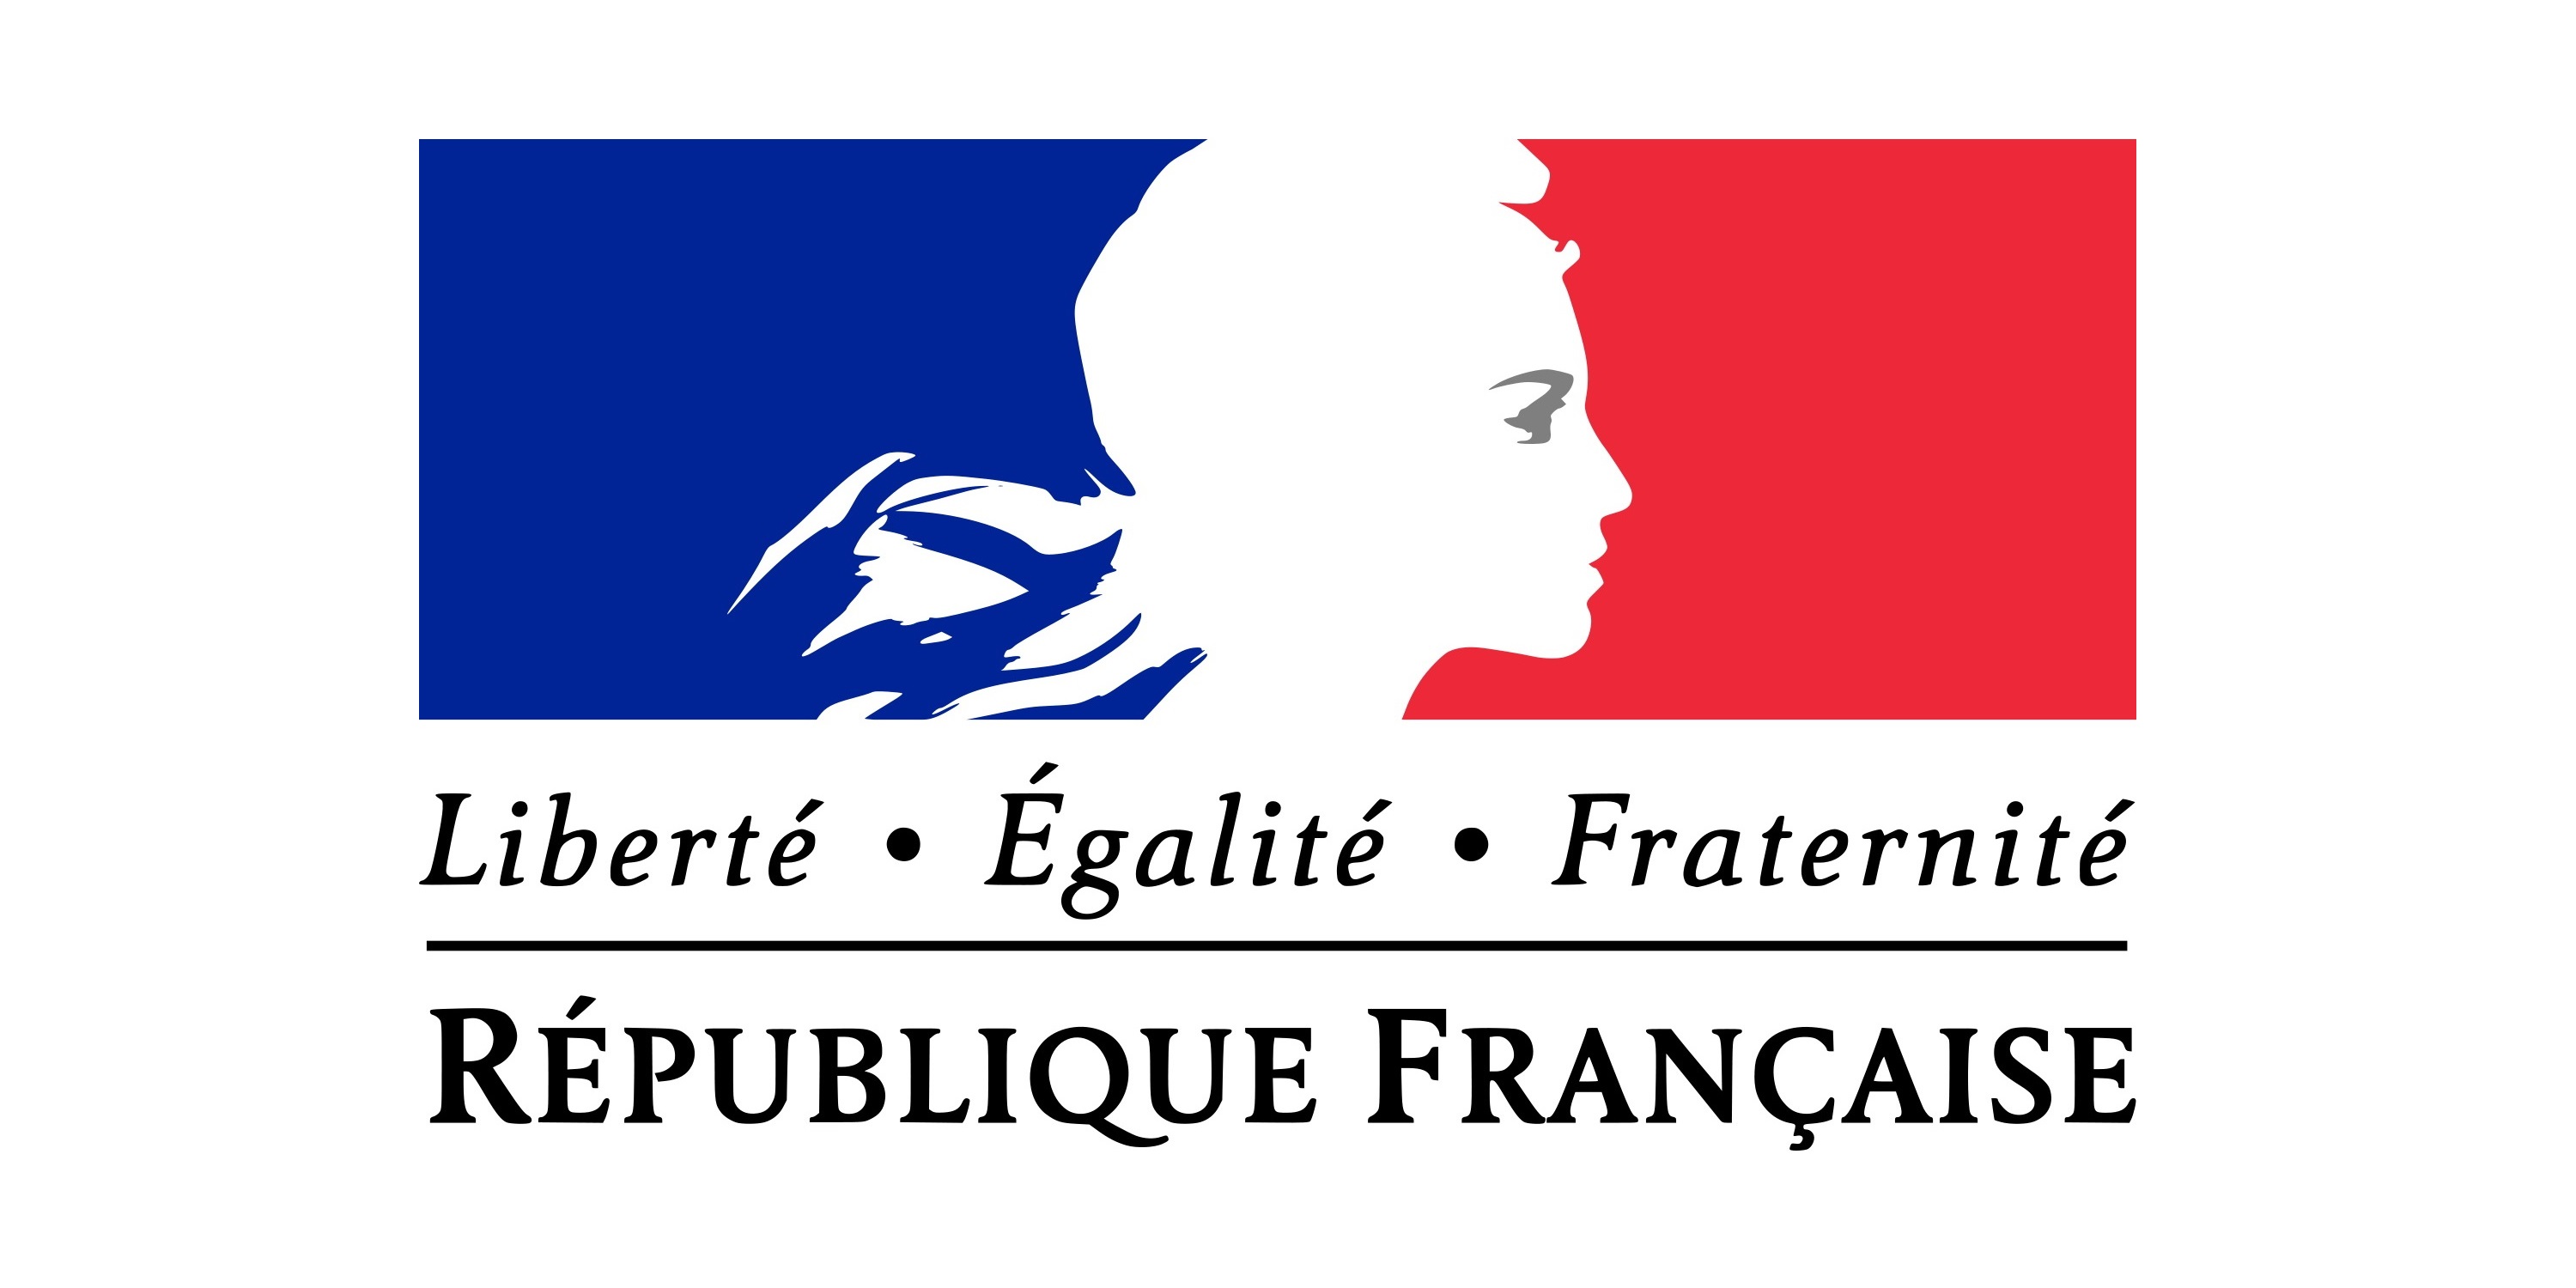 logo-republique-francaise.jpg